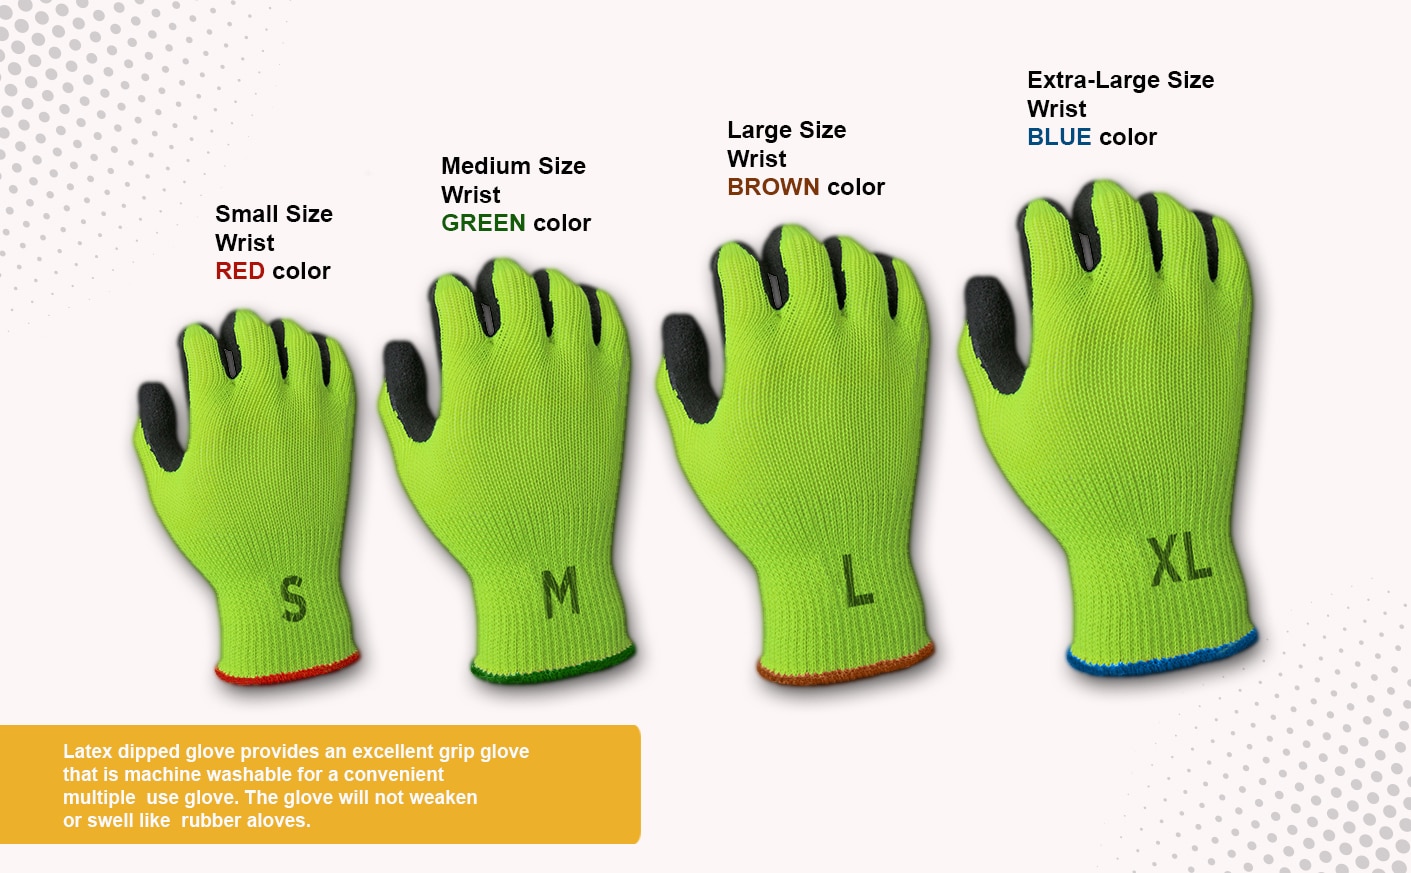 WOLF Hi-Viz Green Heavy-Duty Textured Rubber Latex Grip Knit Glove Quick One Safety